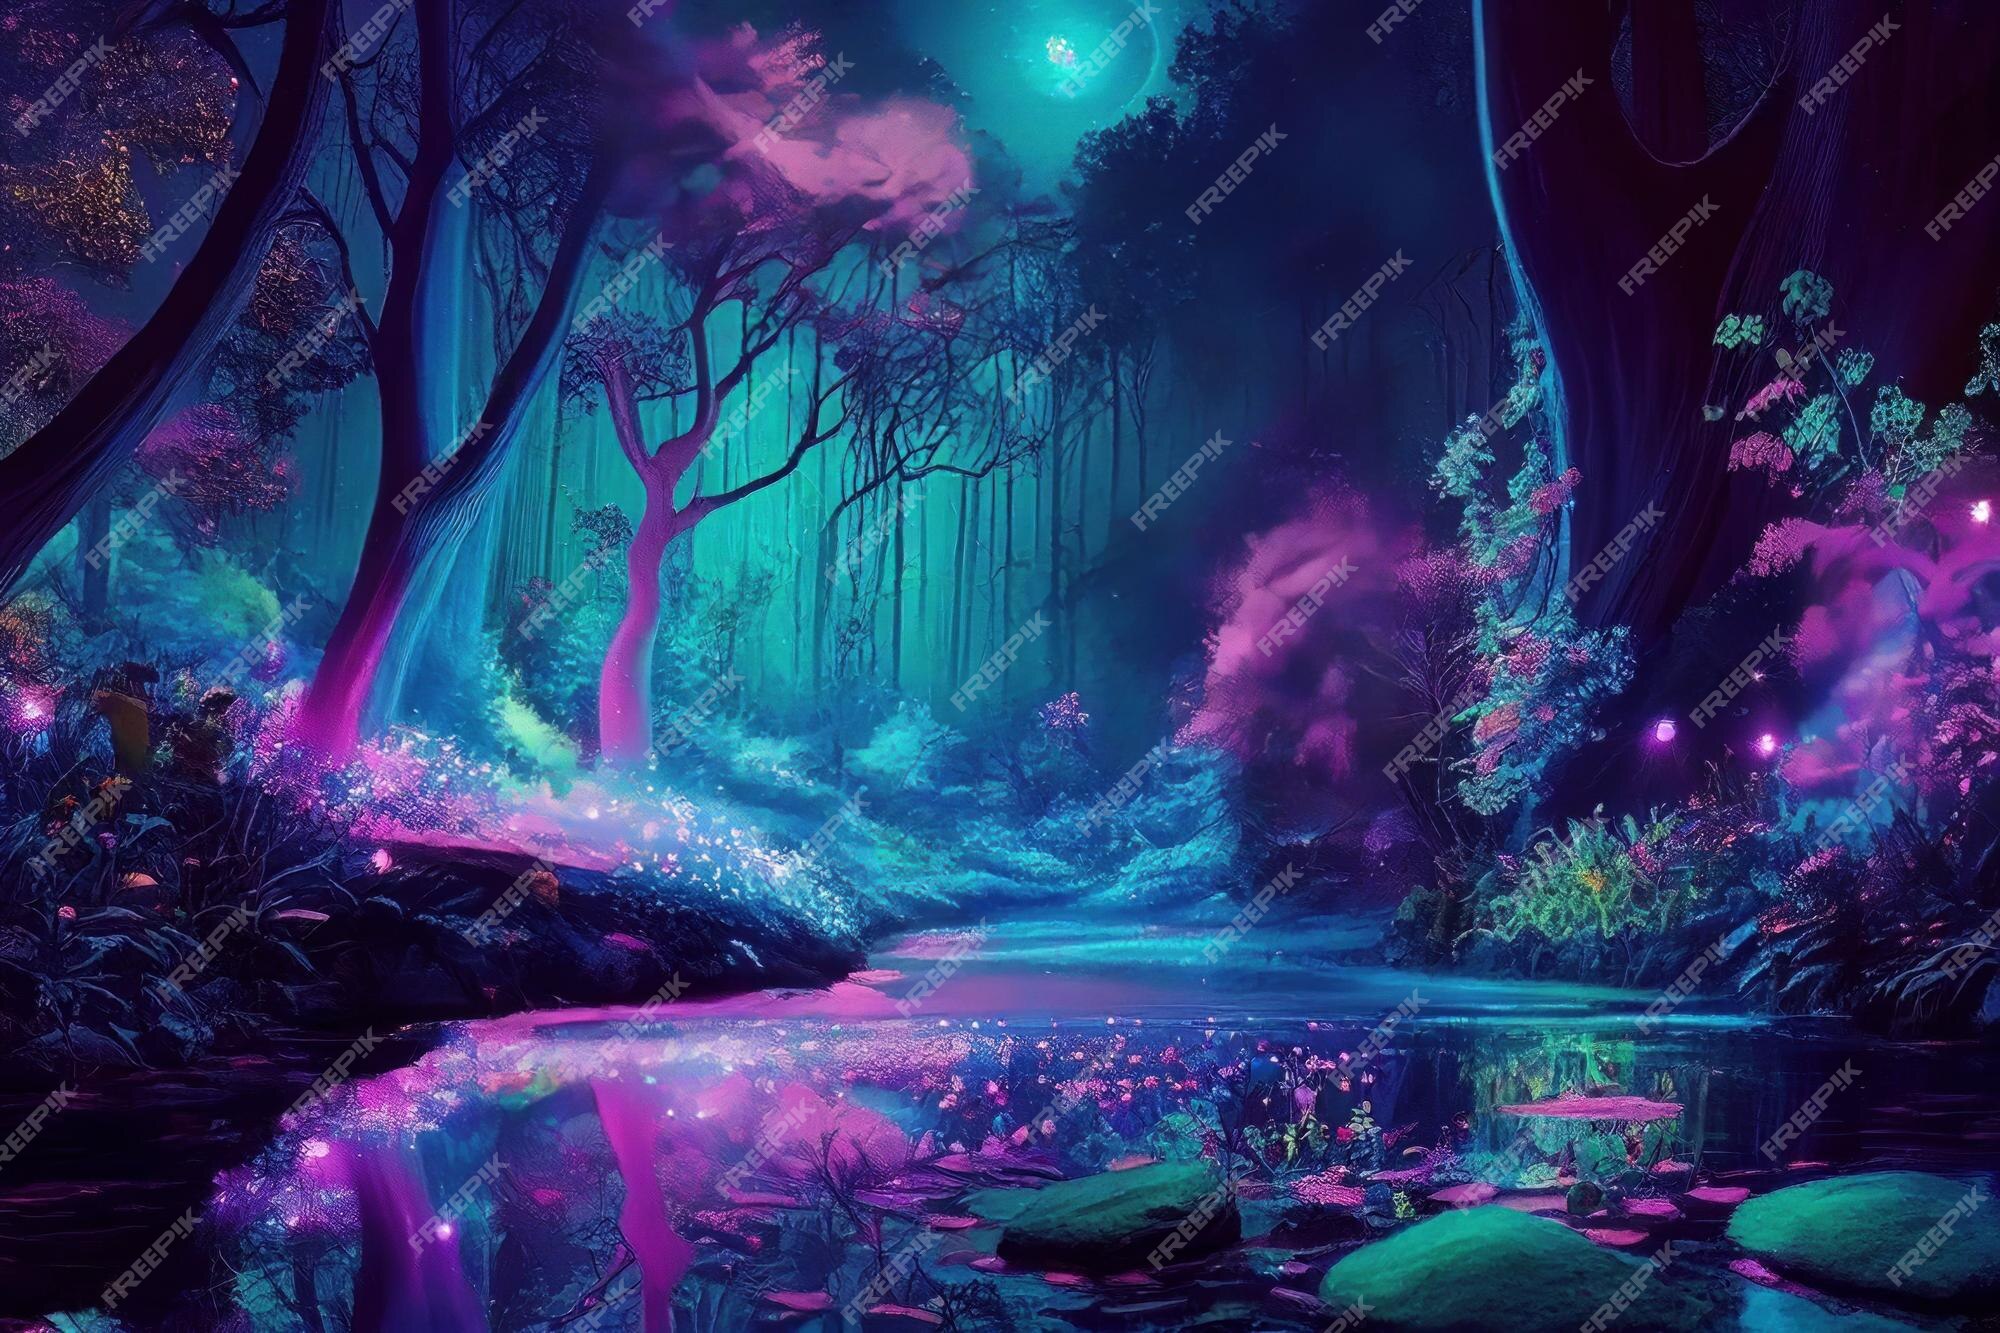 Noite Fantasia Floresta Mágica Paisagem Neon Luz Fada-conto